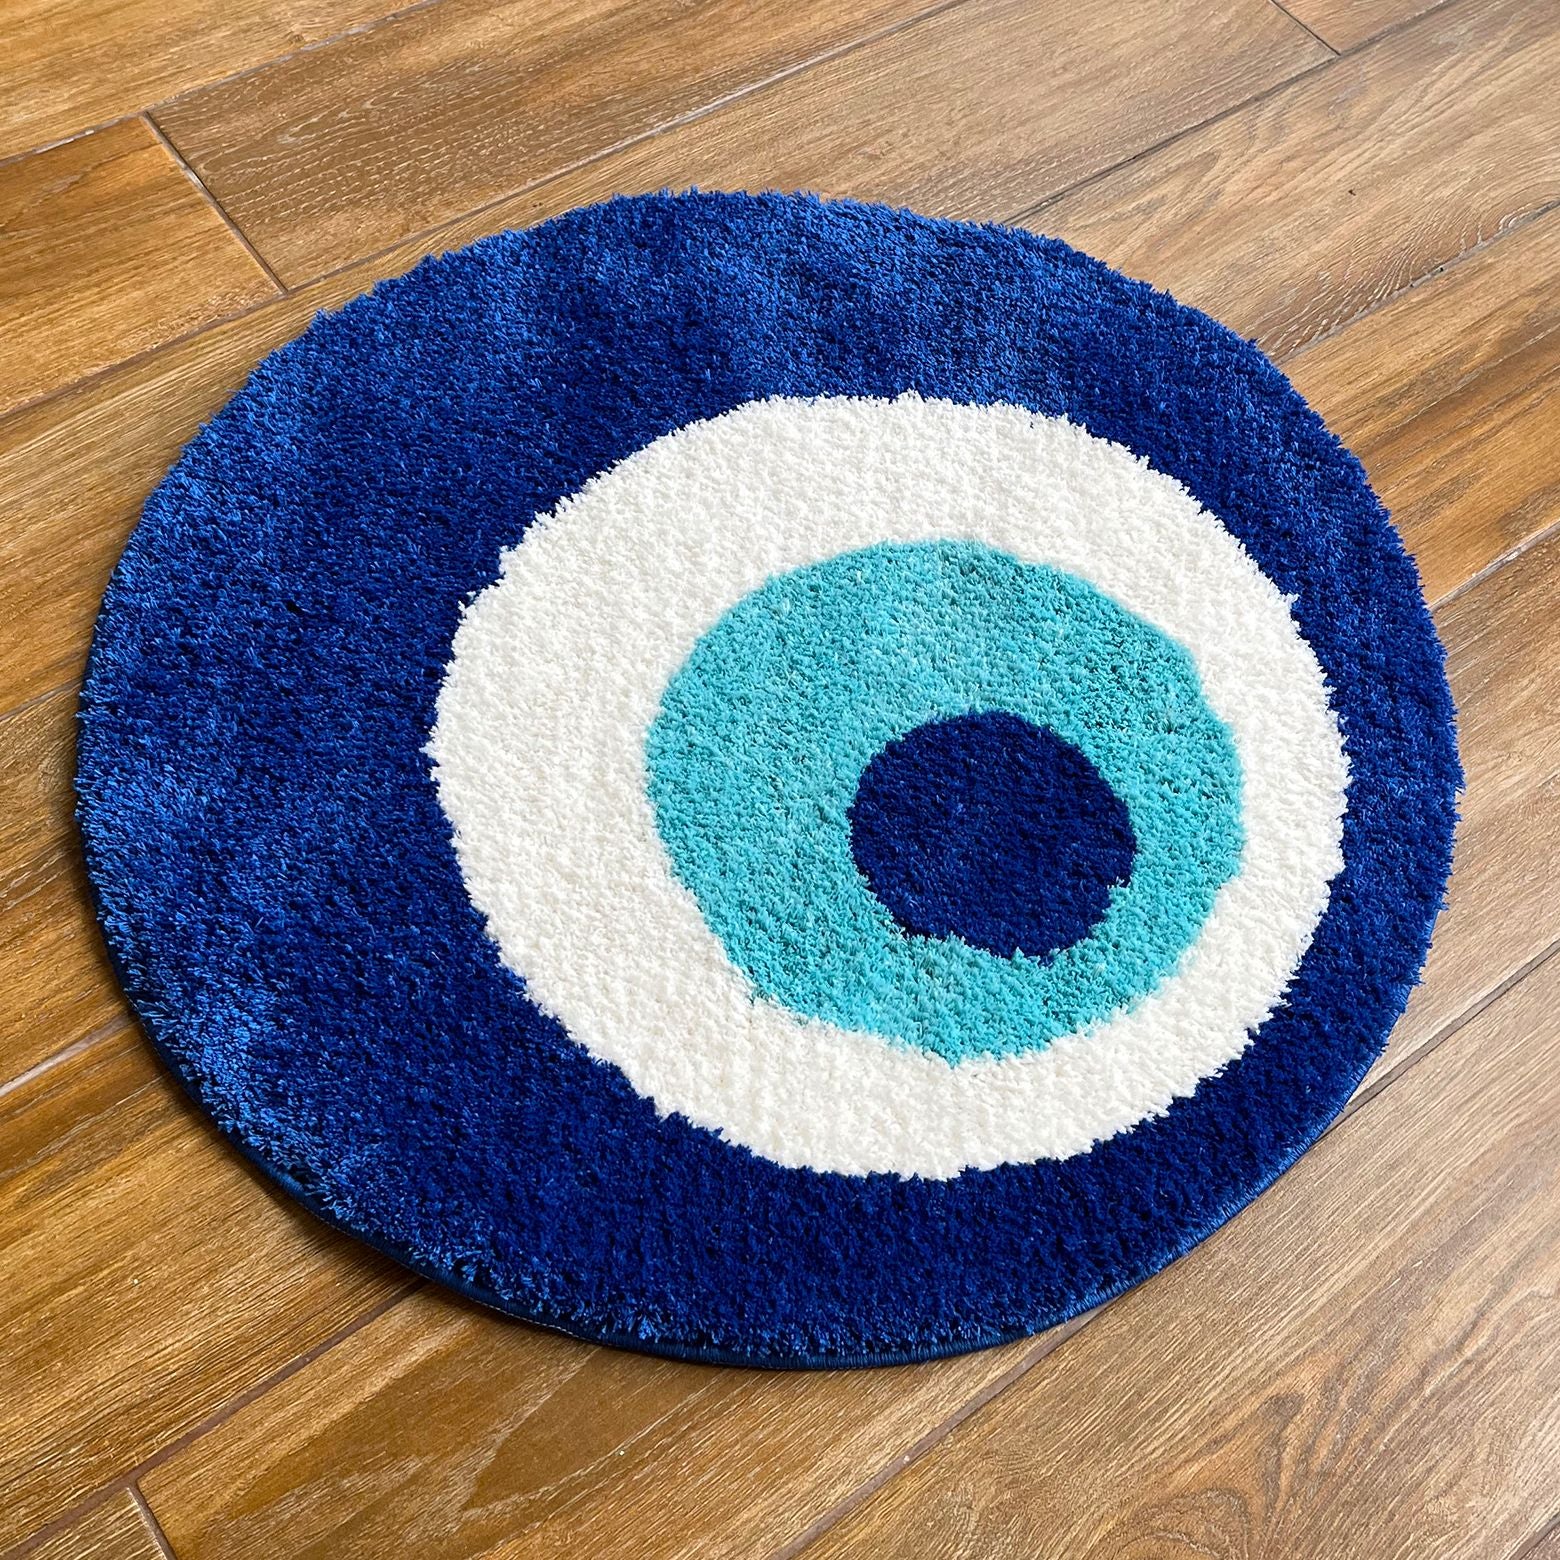 CORX Designs - Blue Eye Circle Rug - Review